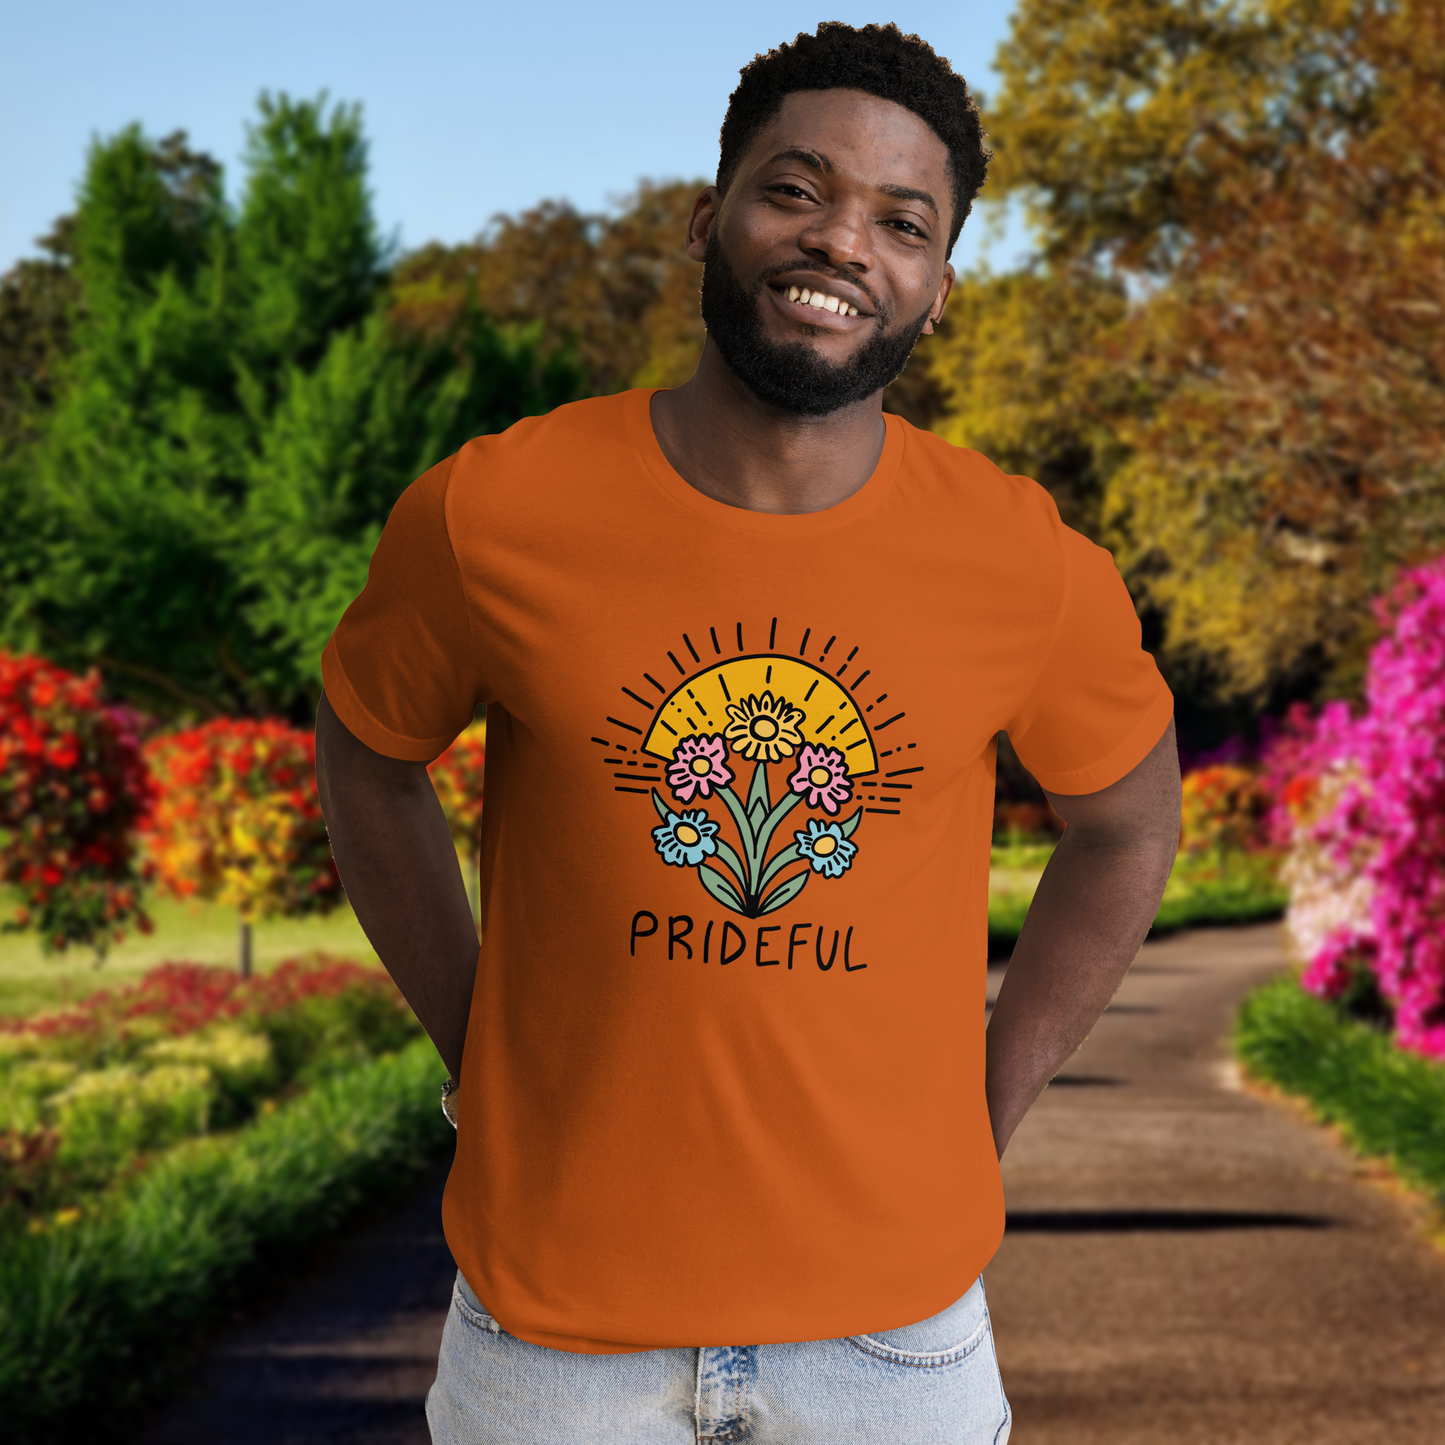 Unisex "Prideful" T-Shirt